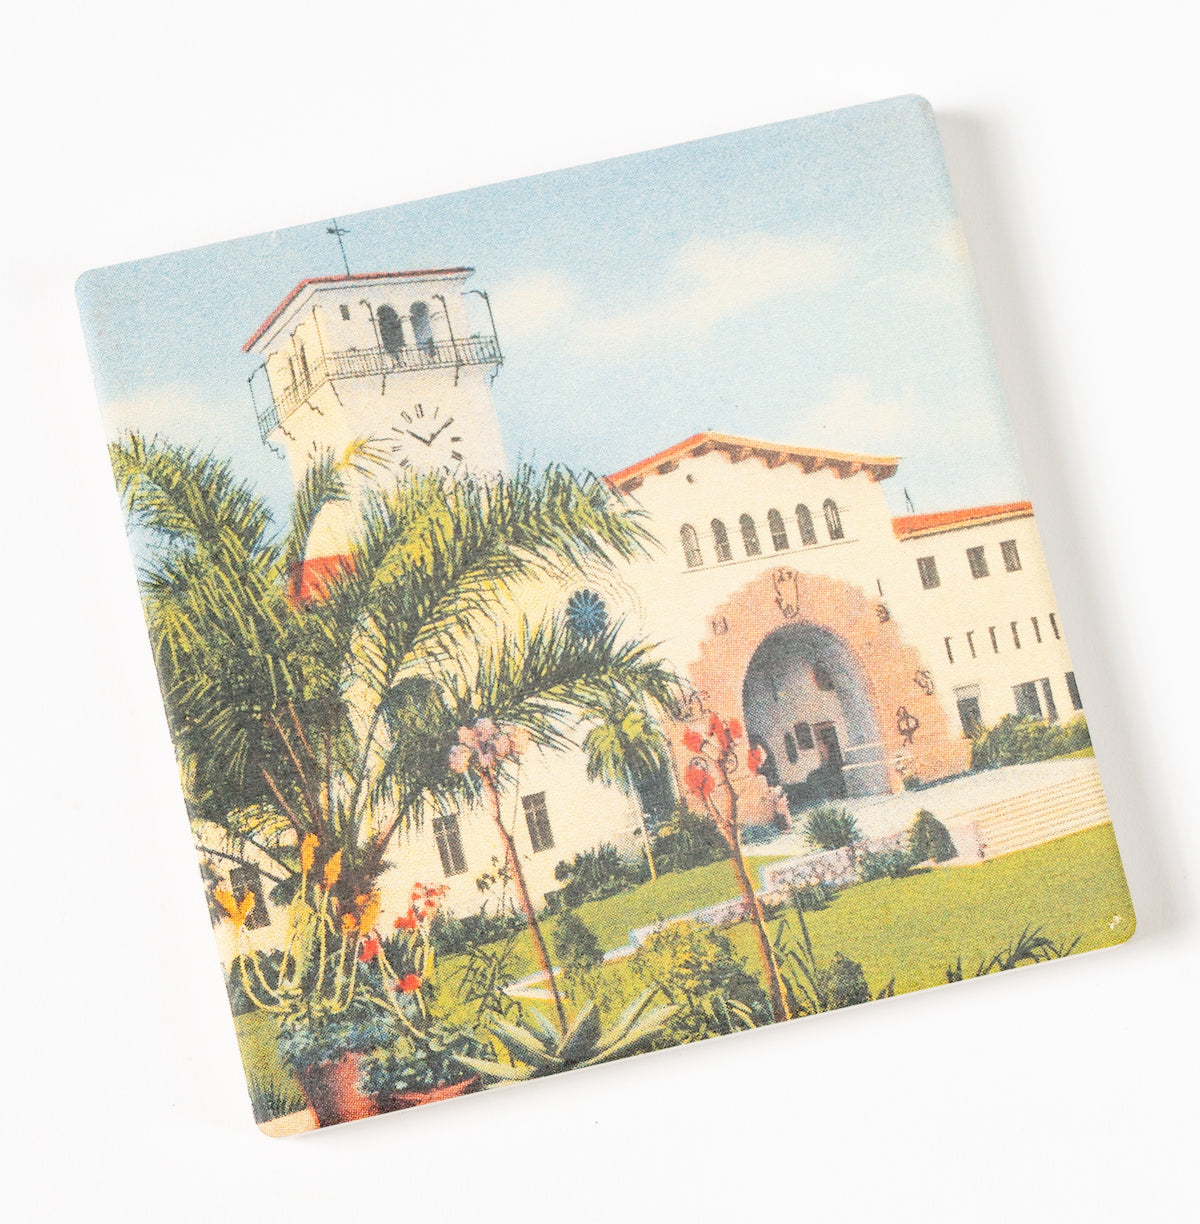 Ceramic coaster with vintage style image of the Santa Barbara Courthouse